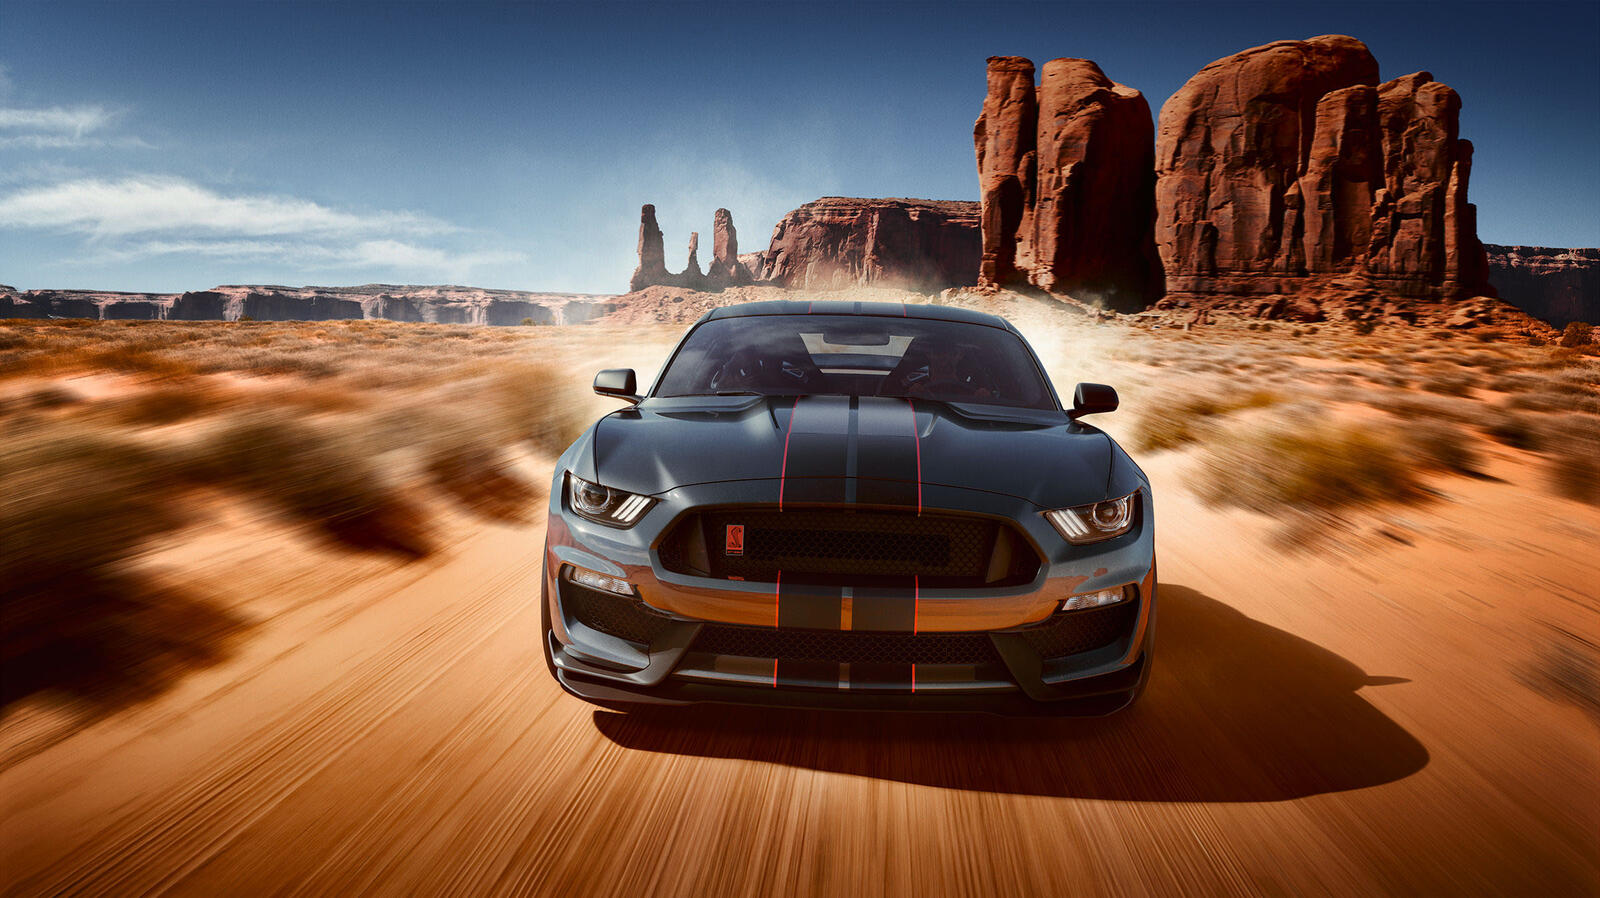 Обои Ford Mustang Shelby пустыня на рабочий стол